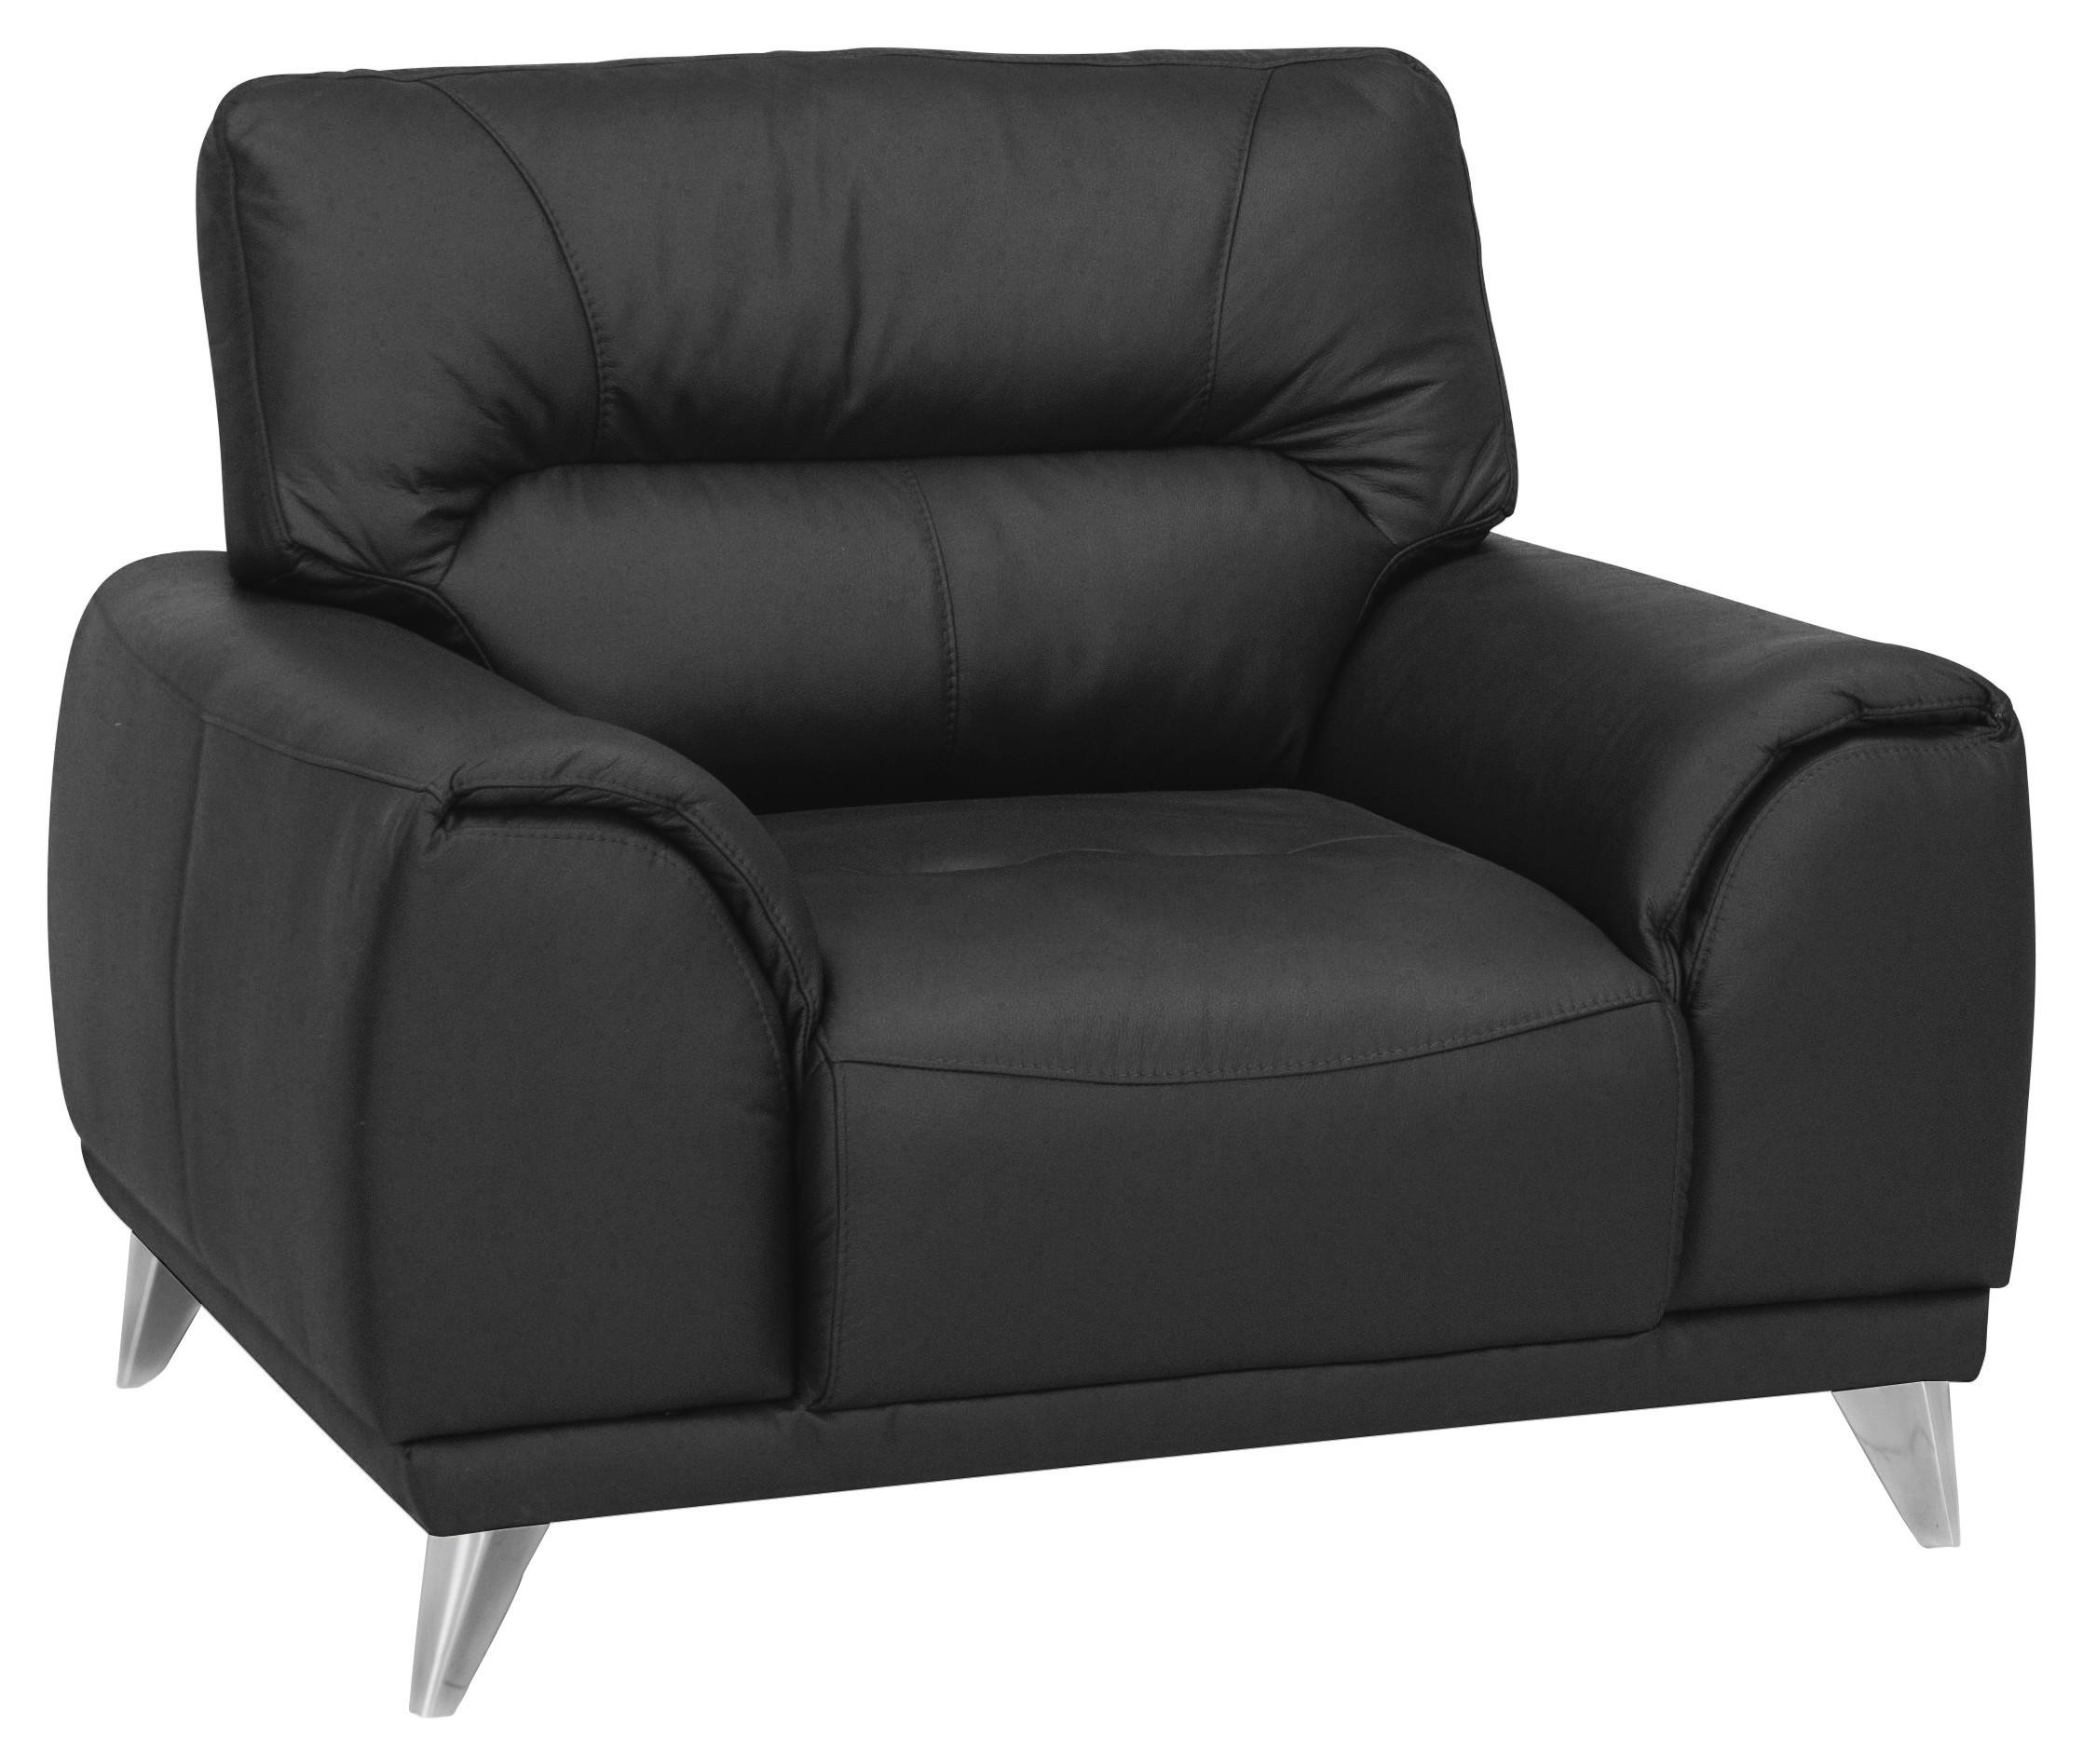 Tv Fotelja Frisco - boje kroma/crna, Modern, tekstil/metal (112/92/96cm) - MID.YOU